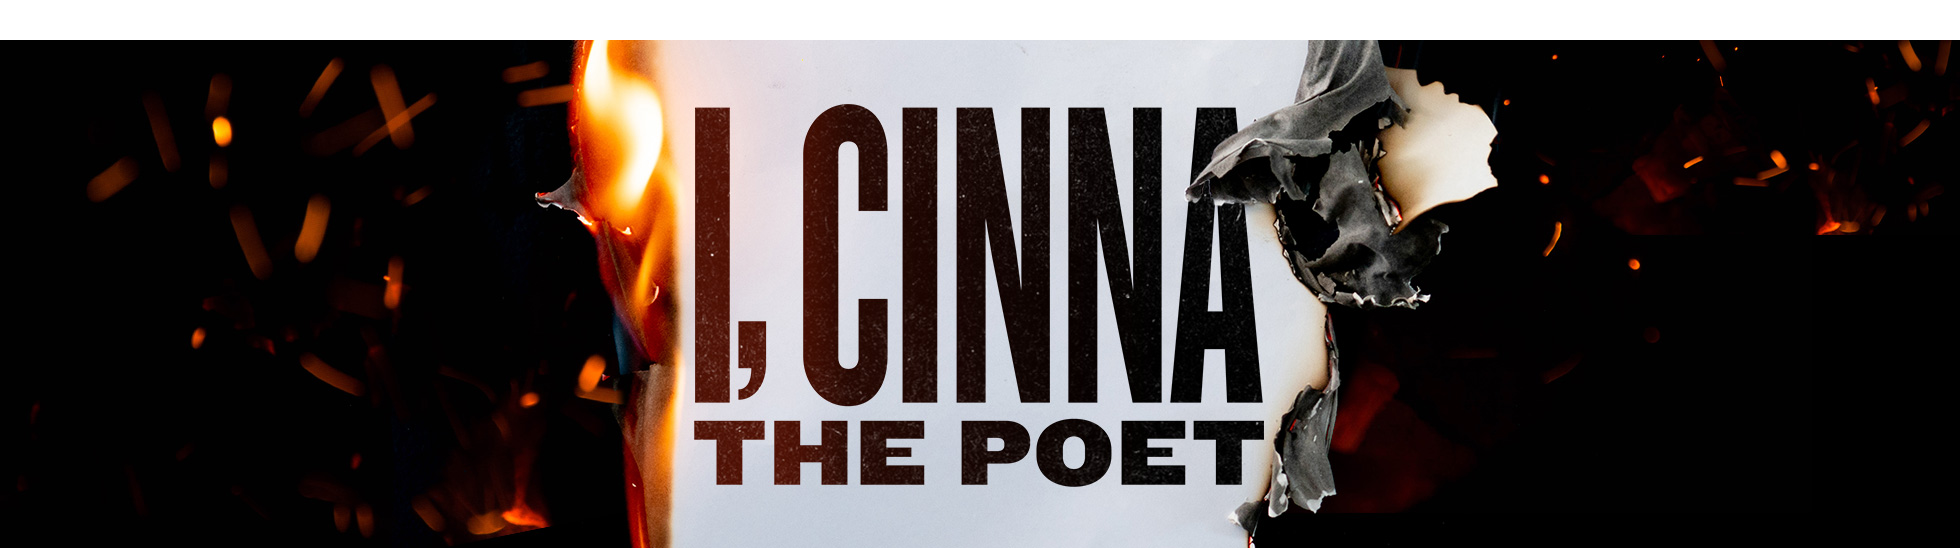 I, Cinna (the poet)